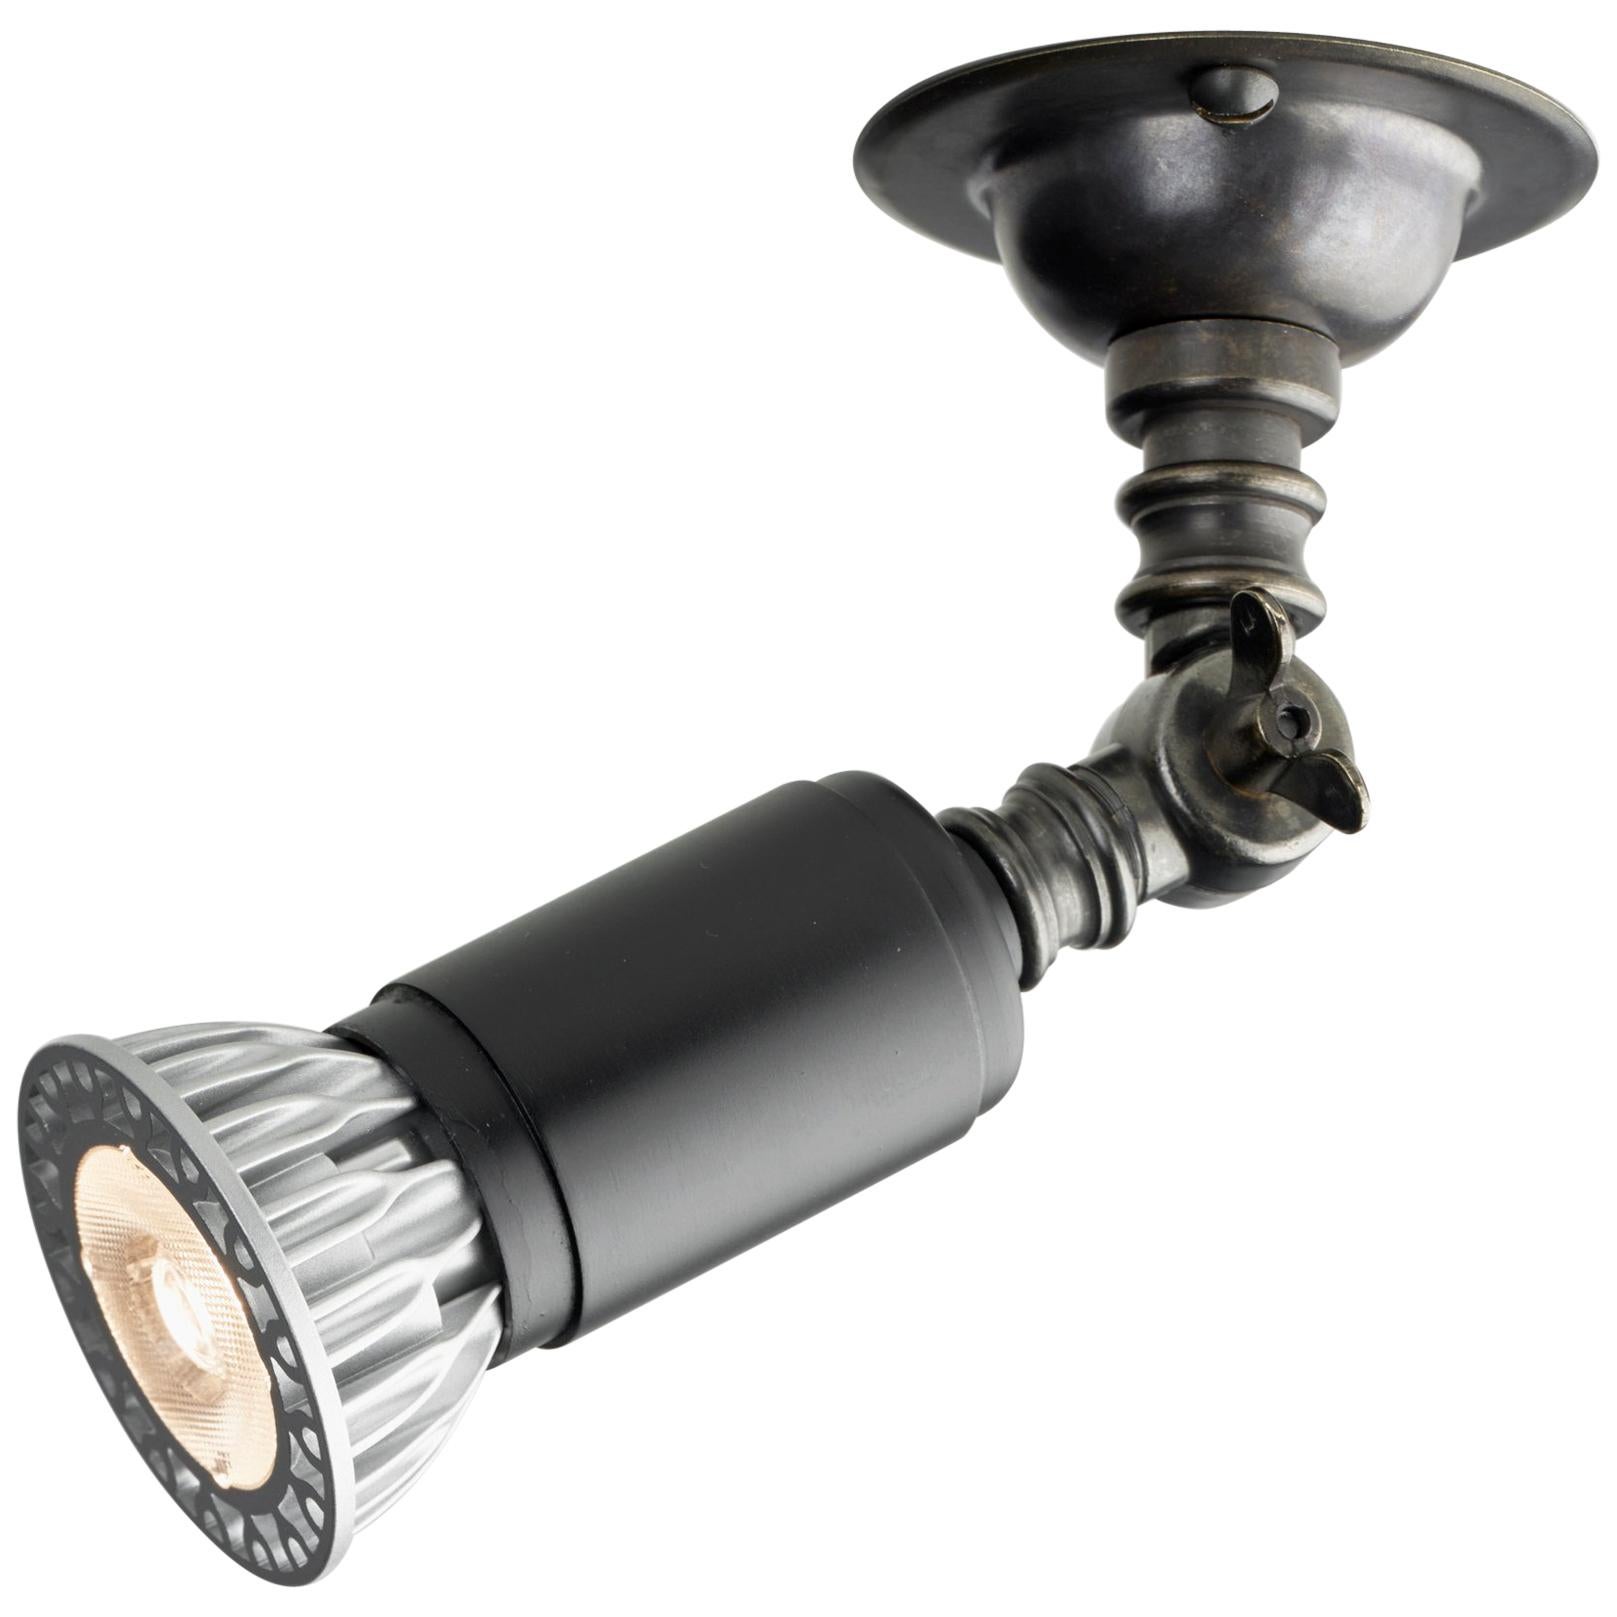 Tekna Lilley Spot GU10 LED Spot Light with Dark Bronze Finish For Sale